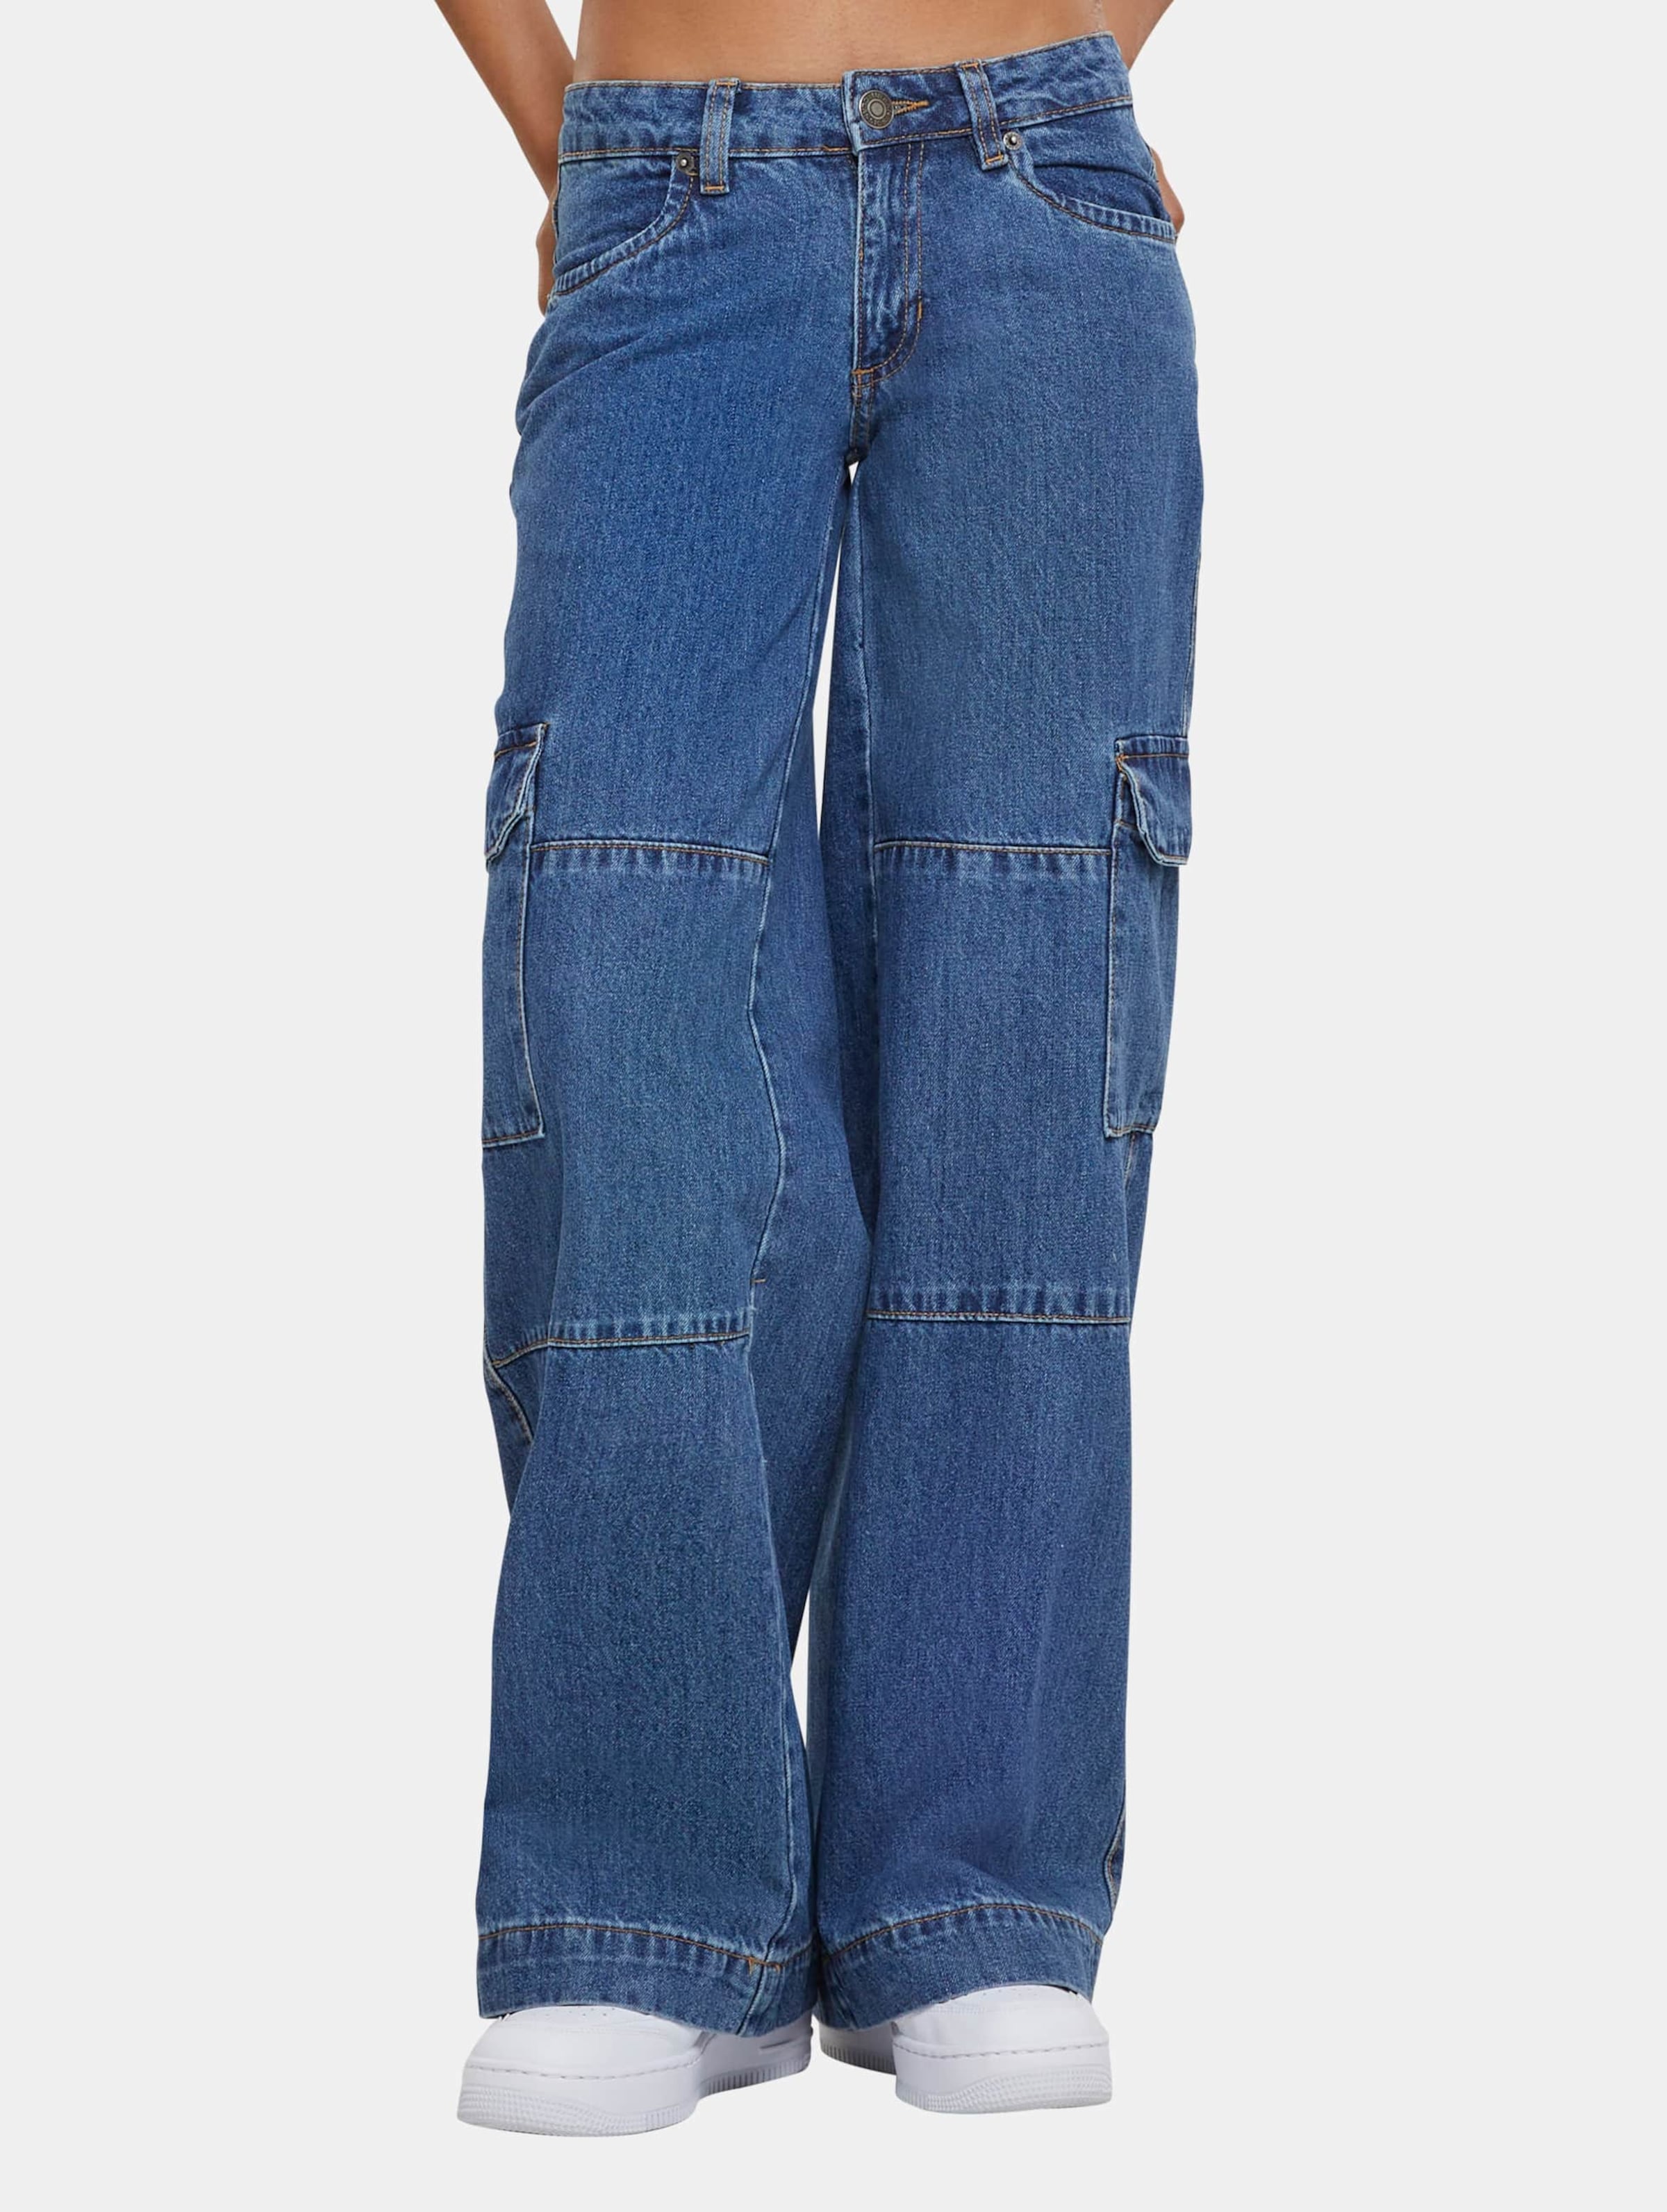 Urban Classics - Low Waist Denim Cargo trousers - Taille, 27 inch - Donkerblauw